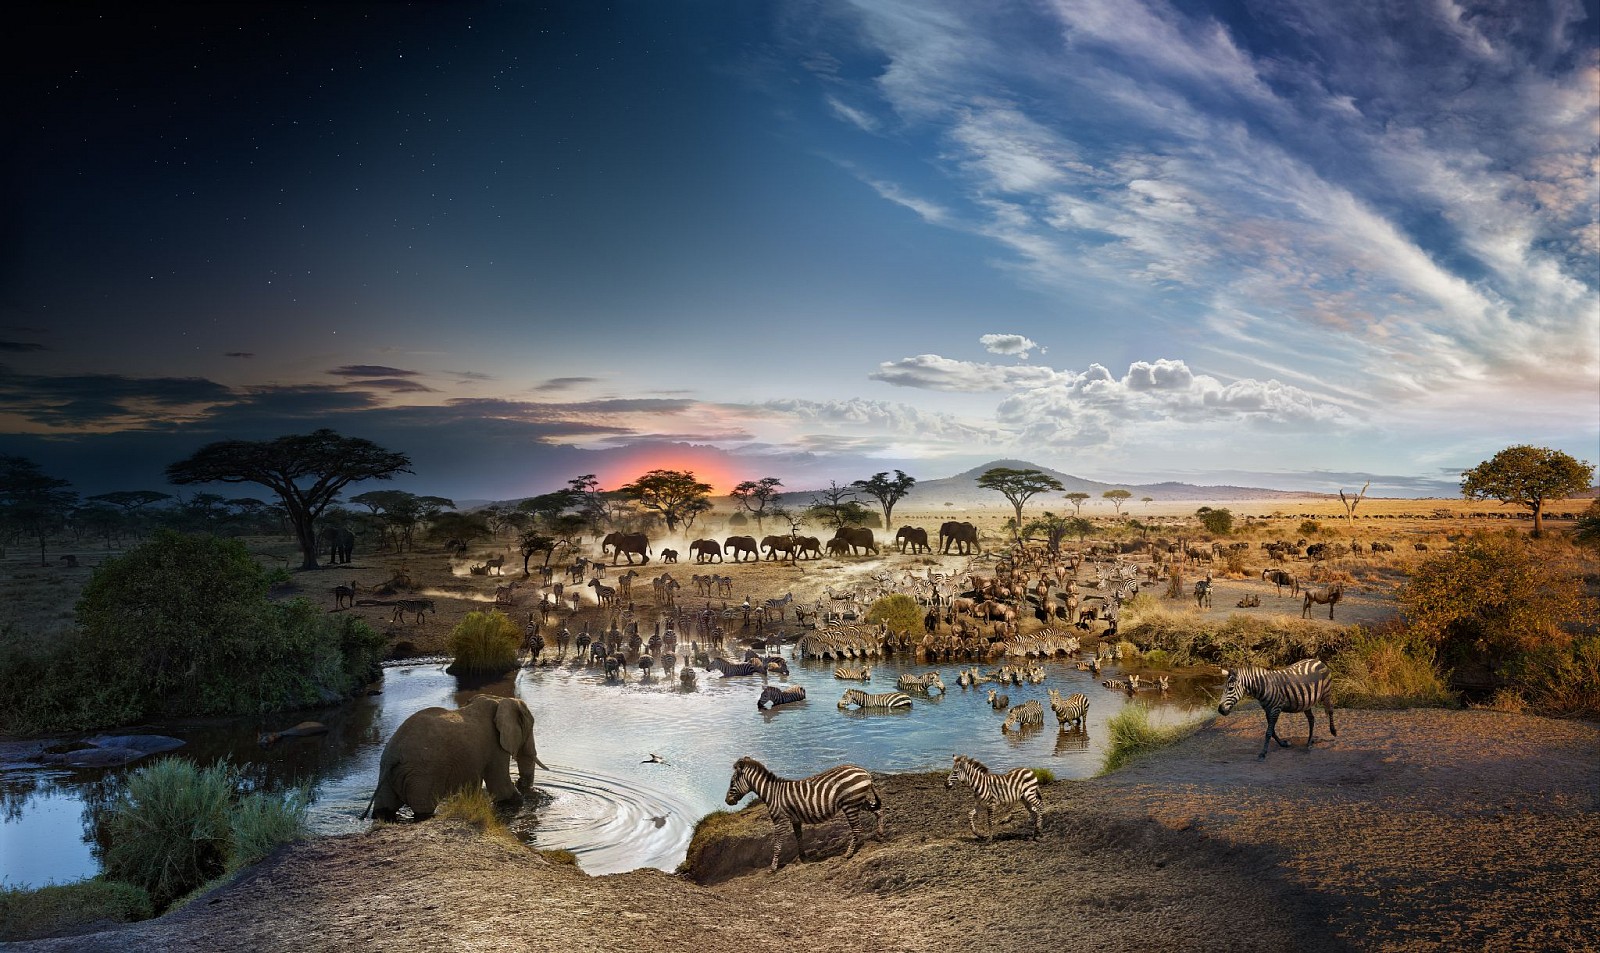 Stephen Wilkes, Serengeti National Park, Tanzania, Day to Night, AP1
FujiFlex Crystal Archive Print, 48 x 81 in. (121.9 x 205.7 cm)
SW240101